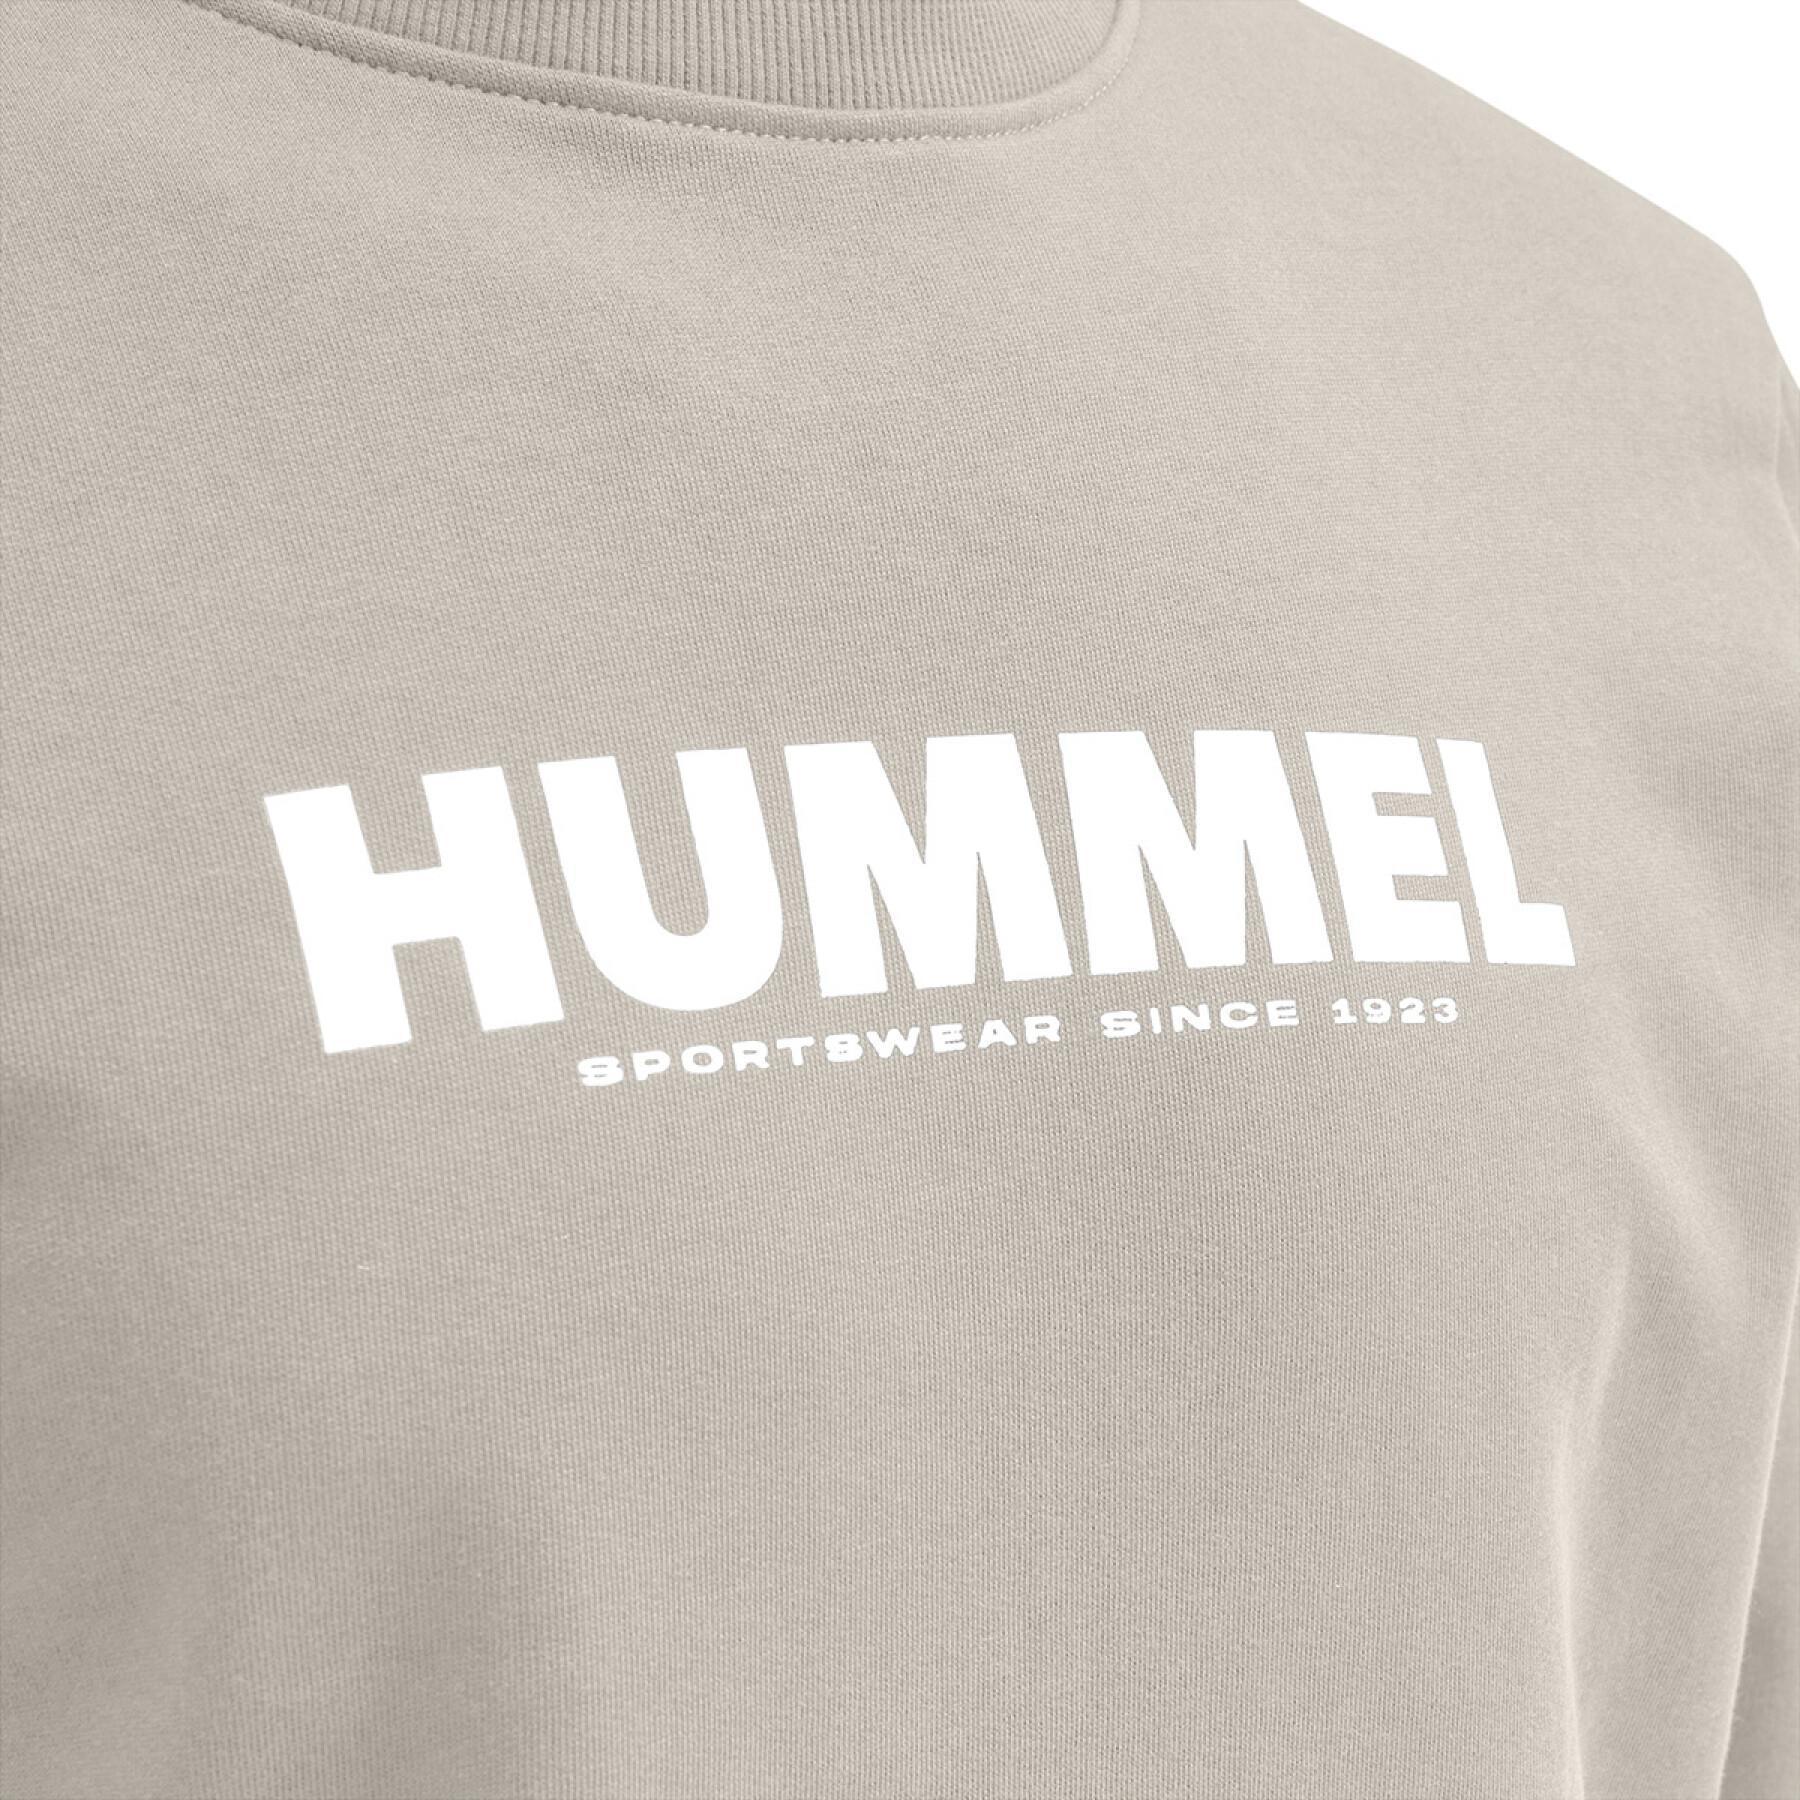 Bluza Hummel hmlLEGACY